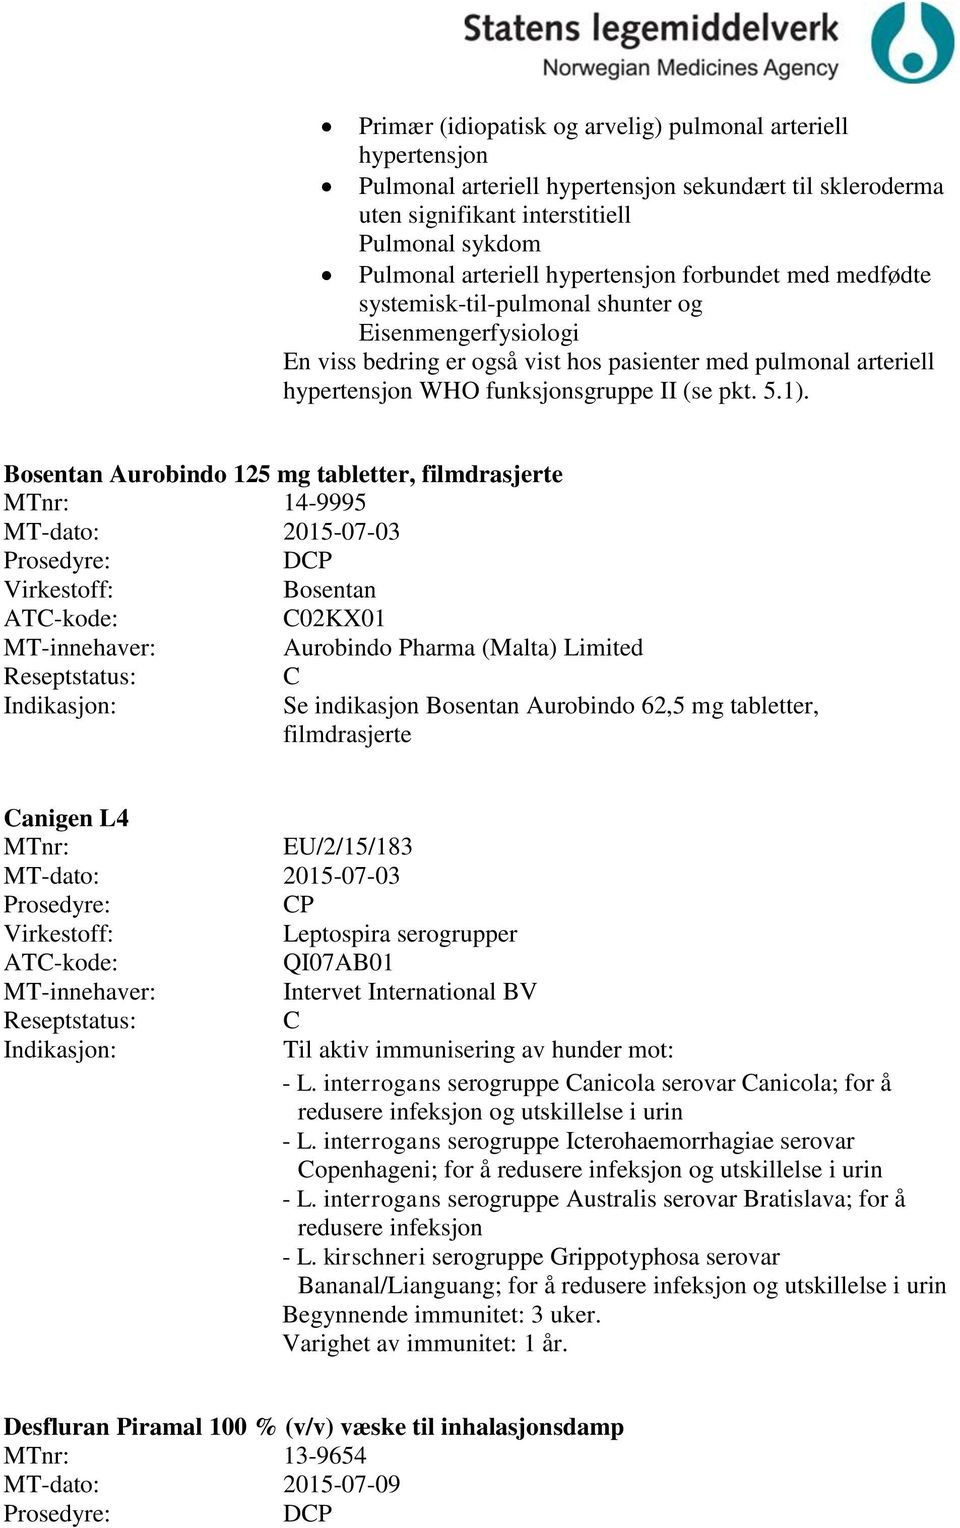 Bosentan Aurobindo 125 mg tabletter, filmdrasjerte 14-9995 MT-dato: 2015-07-03 DP Bosentan 02KX01 Aurobindo Pharma (Malta) Limited Se indikasjon Bosentan Aurobindo 62,5 mg tabletter, filmdrasjerte